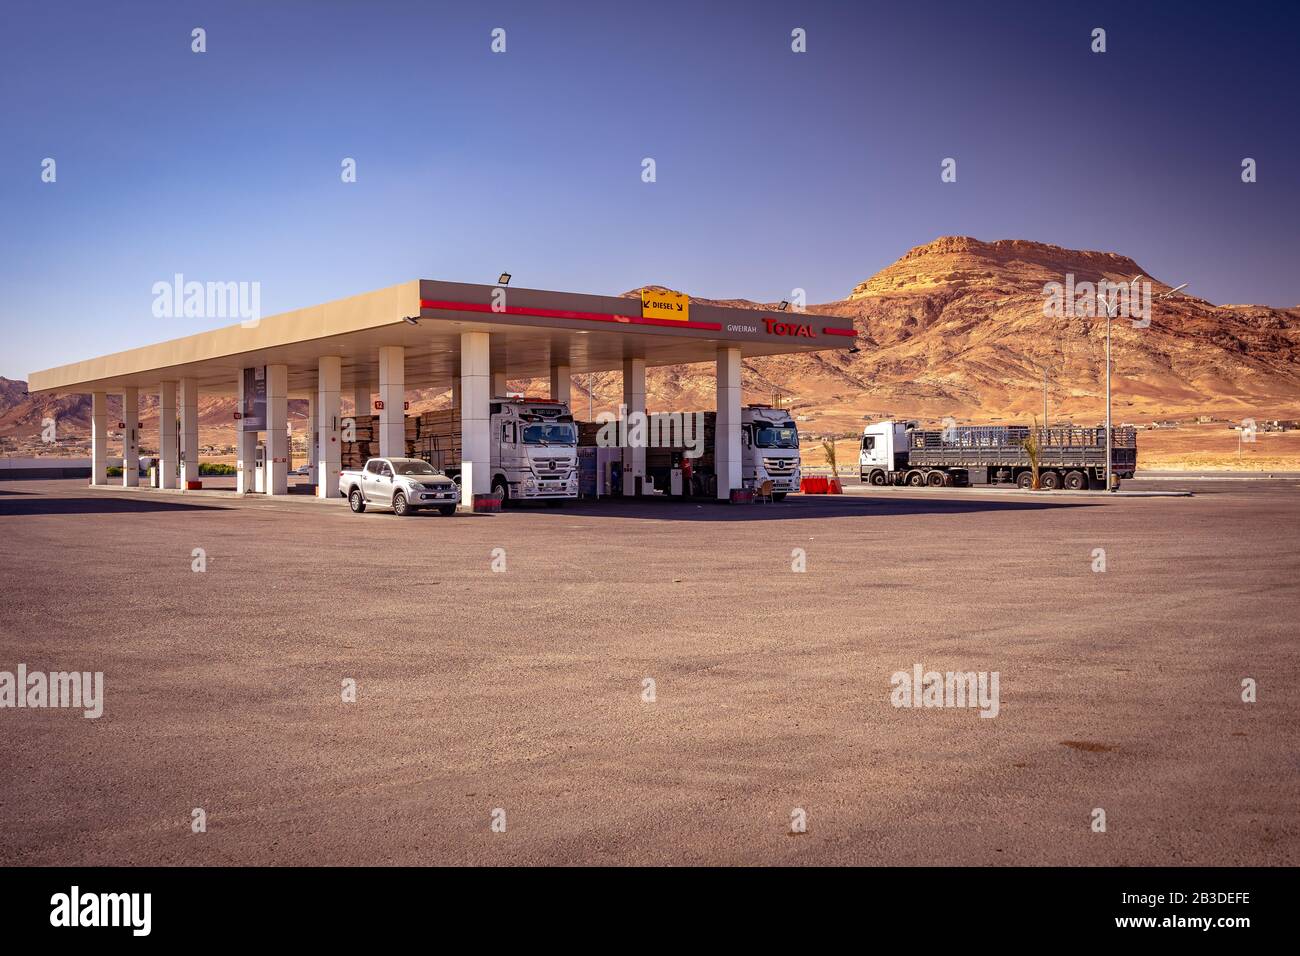 Wadi Rum, Jordan - Total petrol station along the highway Stock Photo